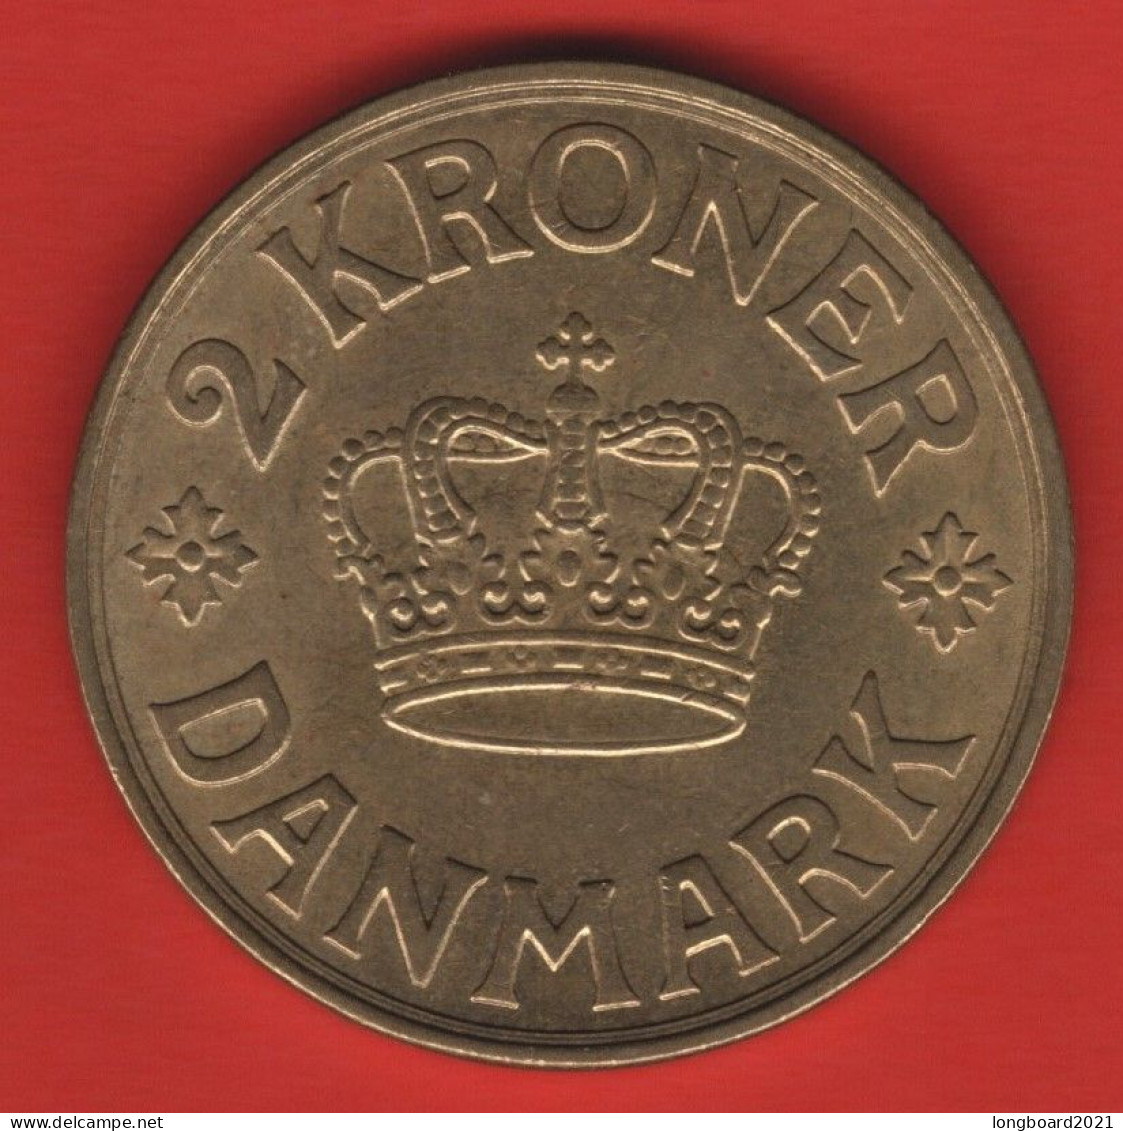 DENMARK - 2 KRONER 1939 - NEARLY UNCIRCULATED - Danemark